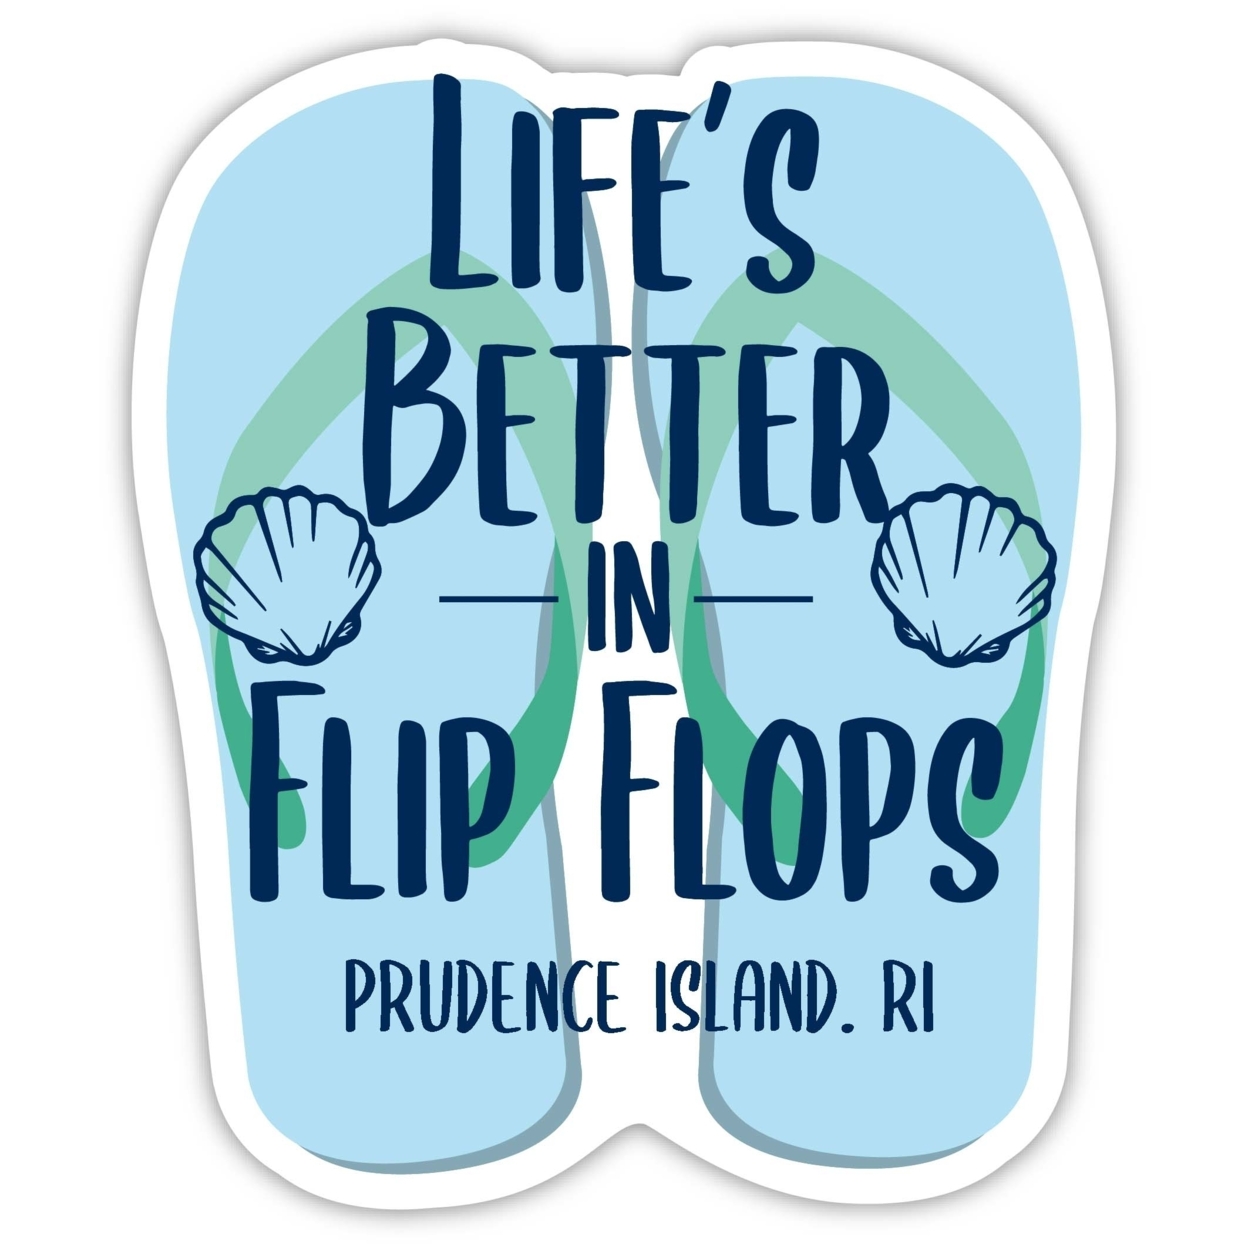 Prudence Island Rhode Island Souvenir 4 Inch Vinyl Decal Sticker Flip Flop Design